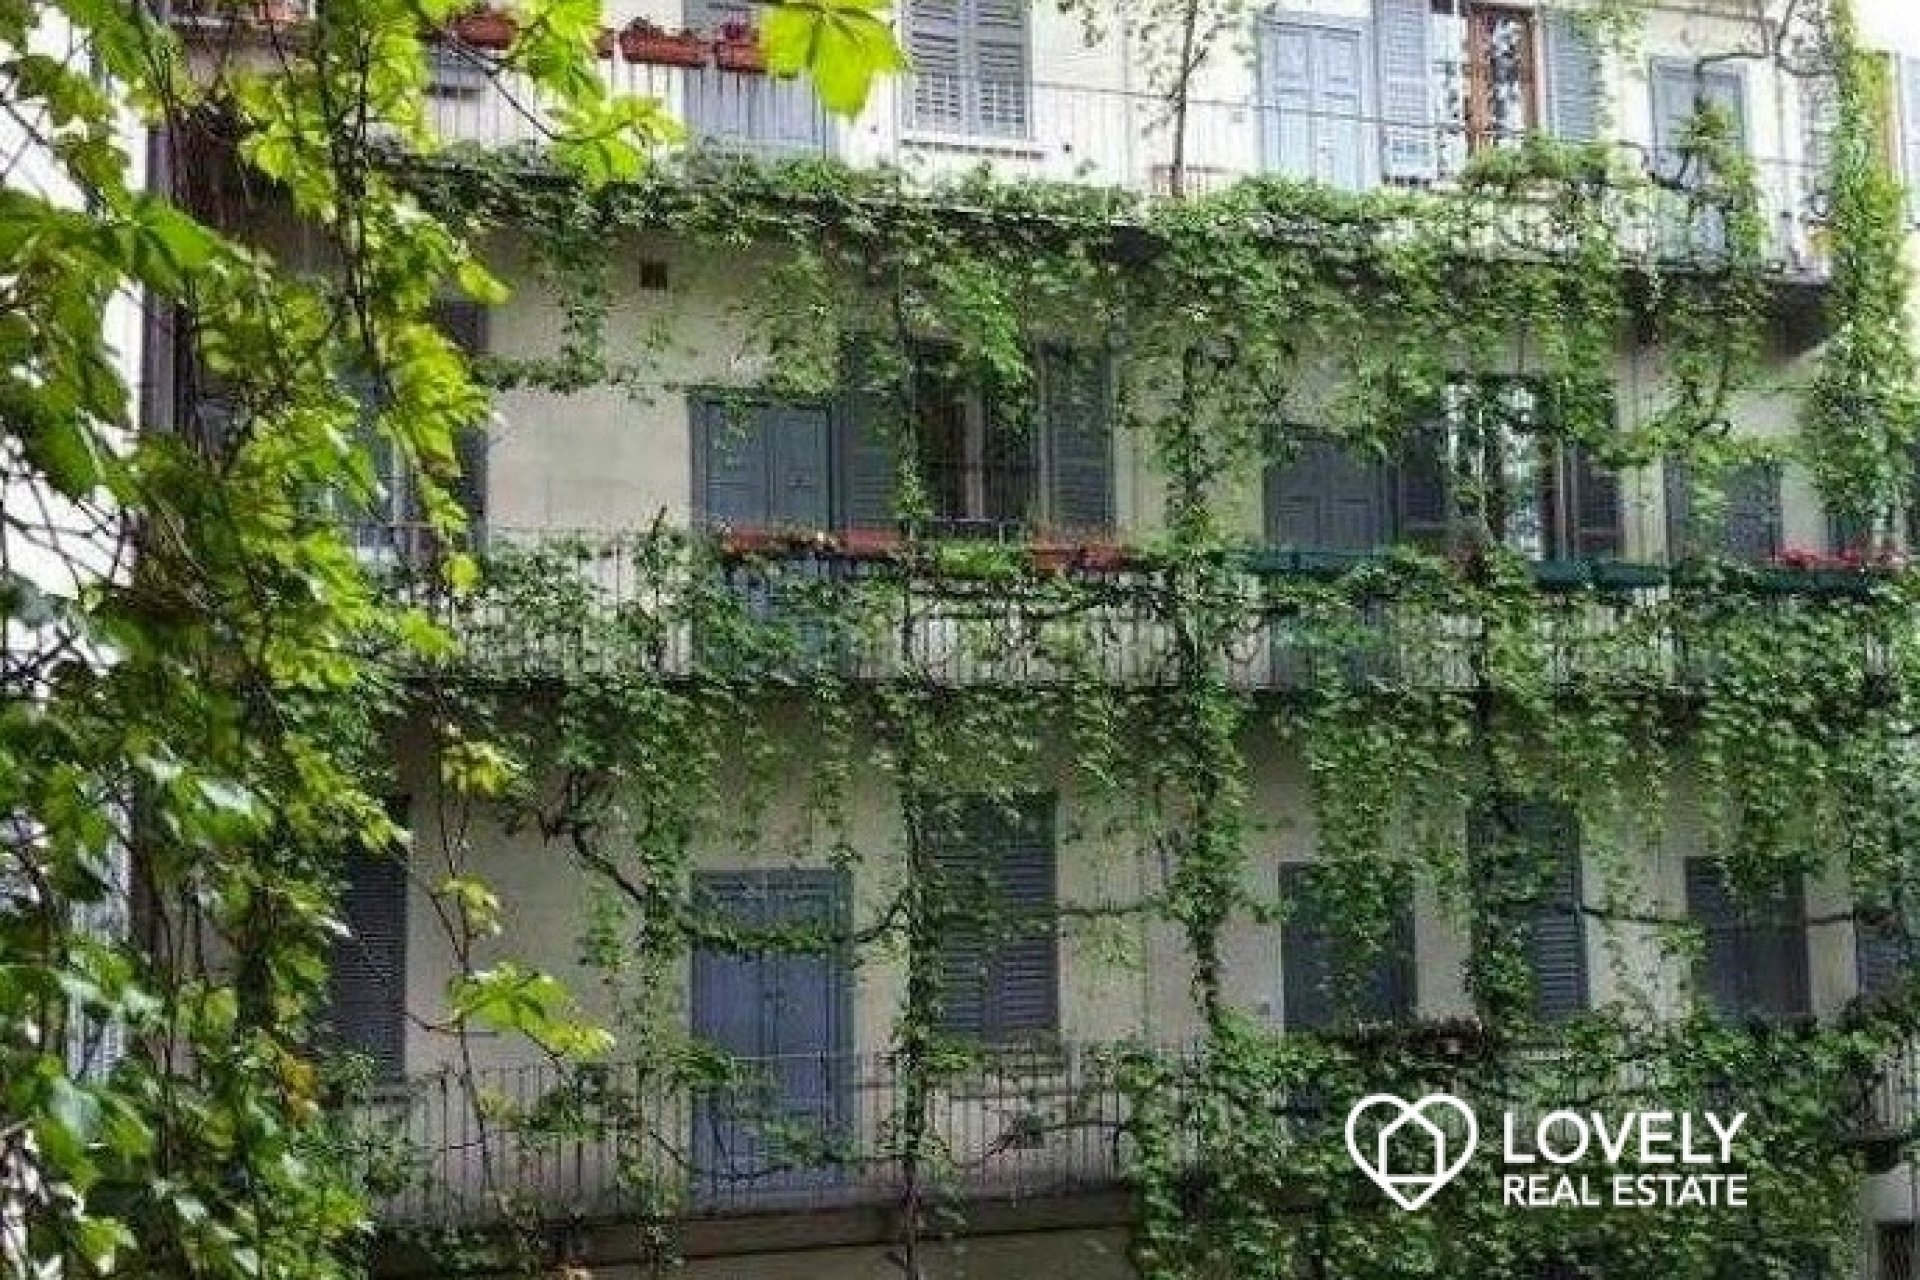 Vendita Apartment Milano - BEAUTIFUL APARTMENT CLOSE TO CITY CENTRE Locality Cadorna - Magenta - San Vittore